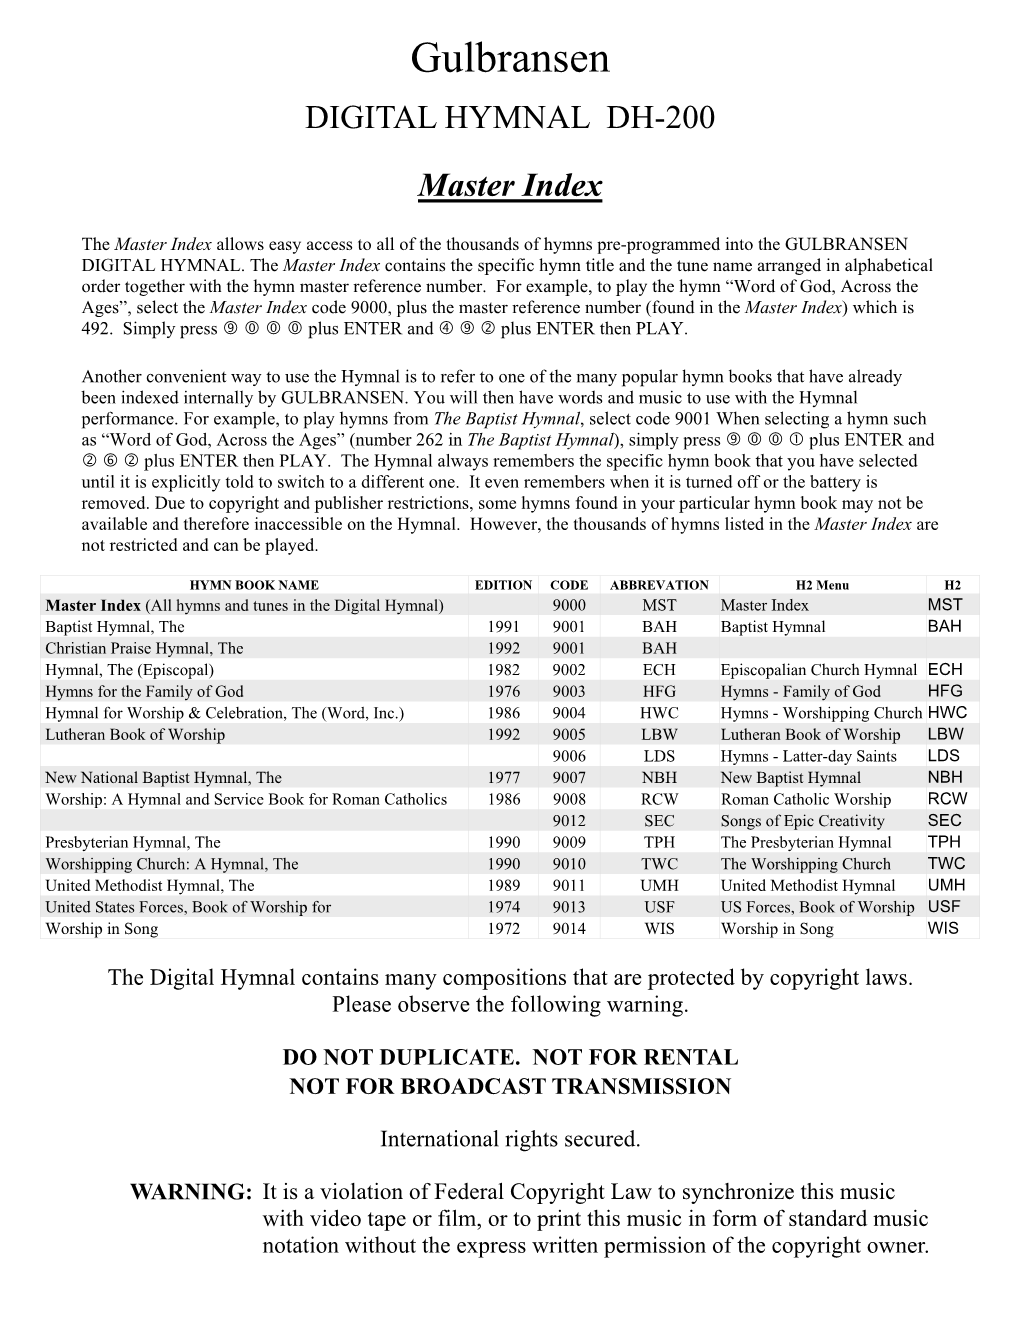 Digital Hymnal II Master Index 20100615 Full Page for PDF.Pub